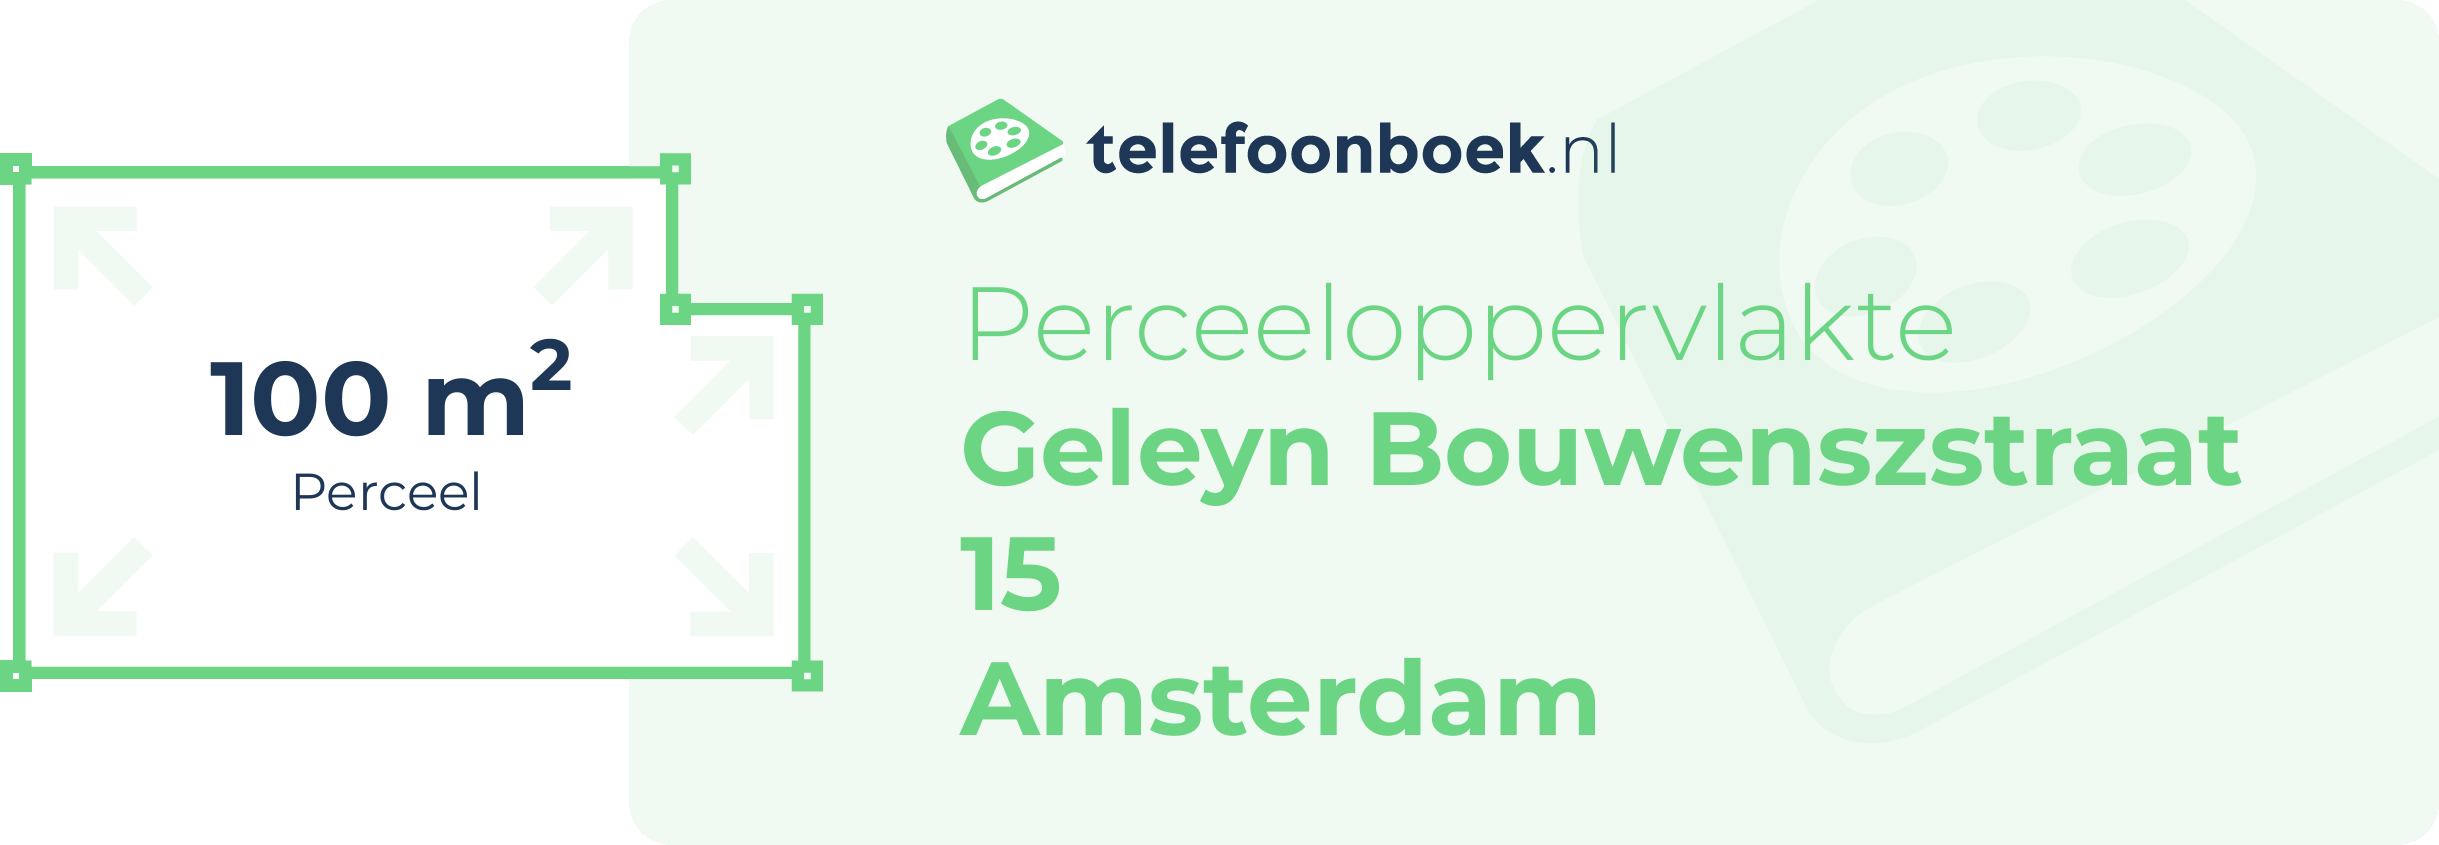 Perceeloppervlakte Geleyn Bouwenszstraat 15 Amsterdam